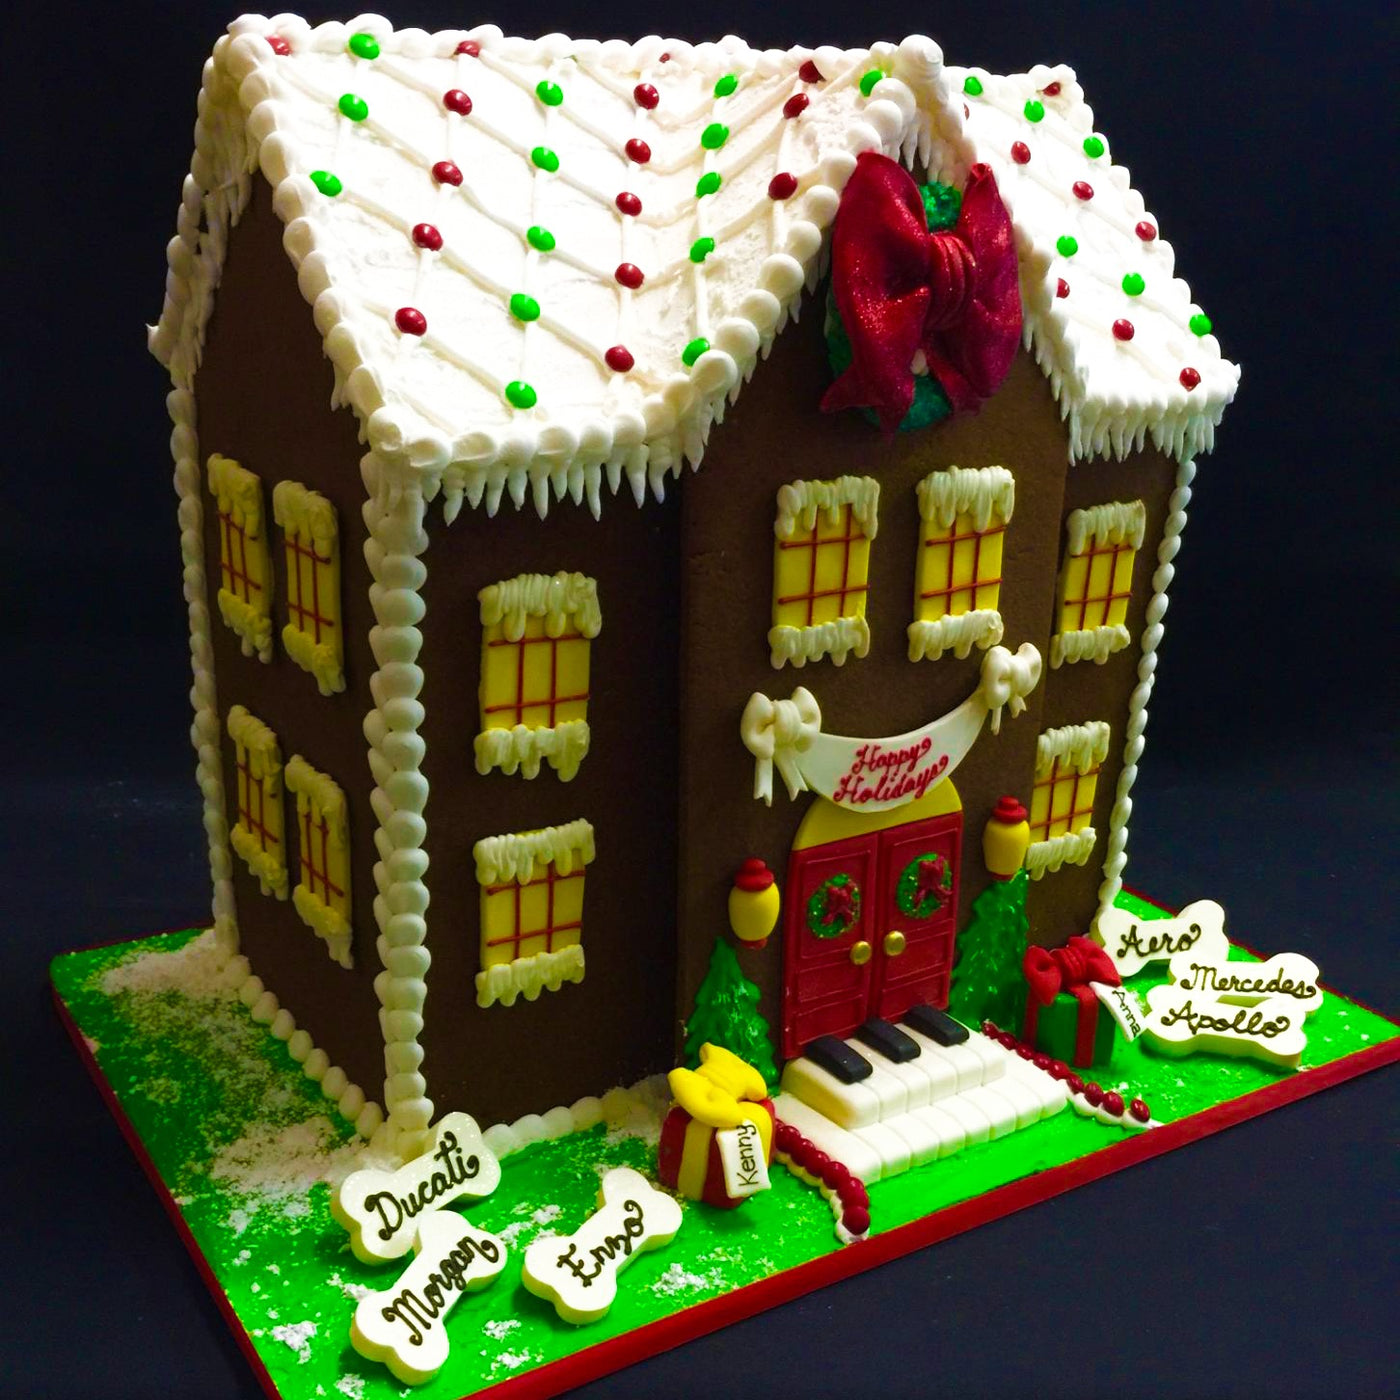 Custom Gingerbread House or Mansion - Sweet E's Bake Shop - Sweet E's Bake Shop